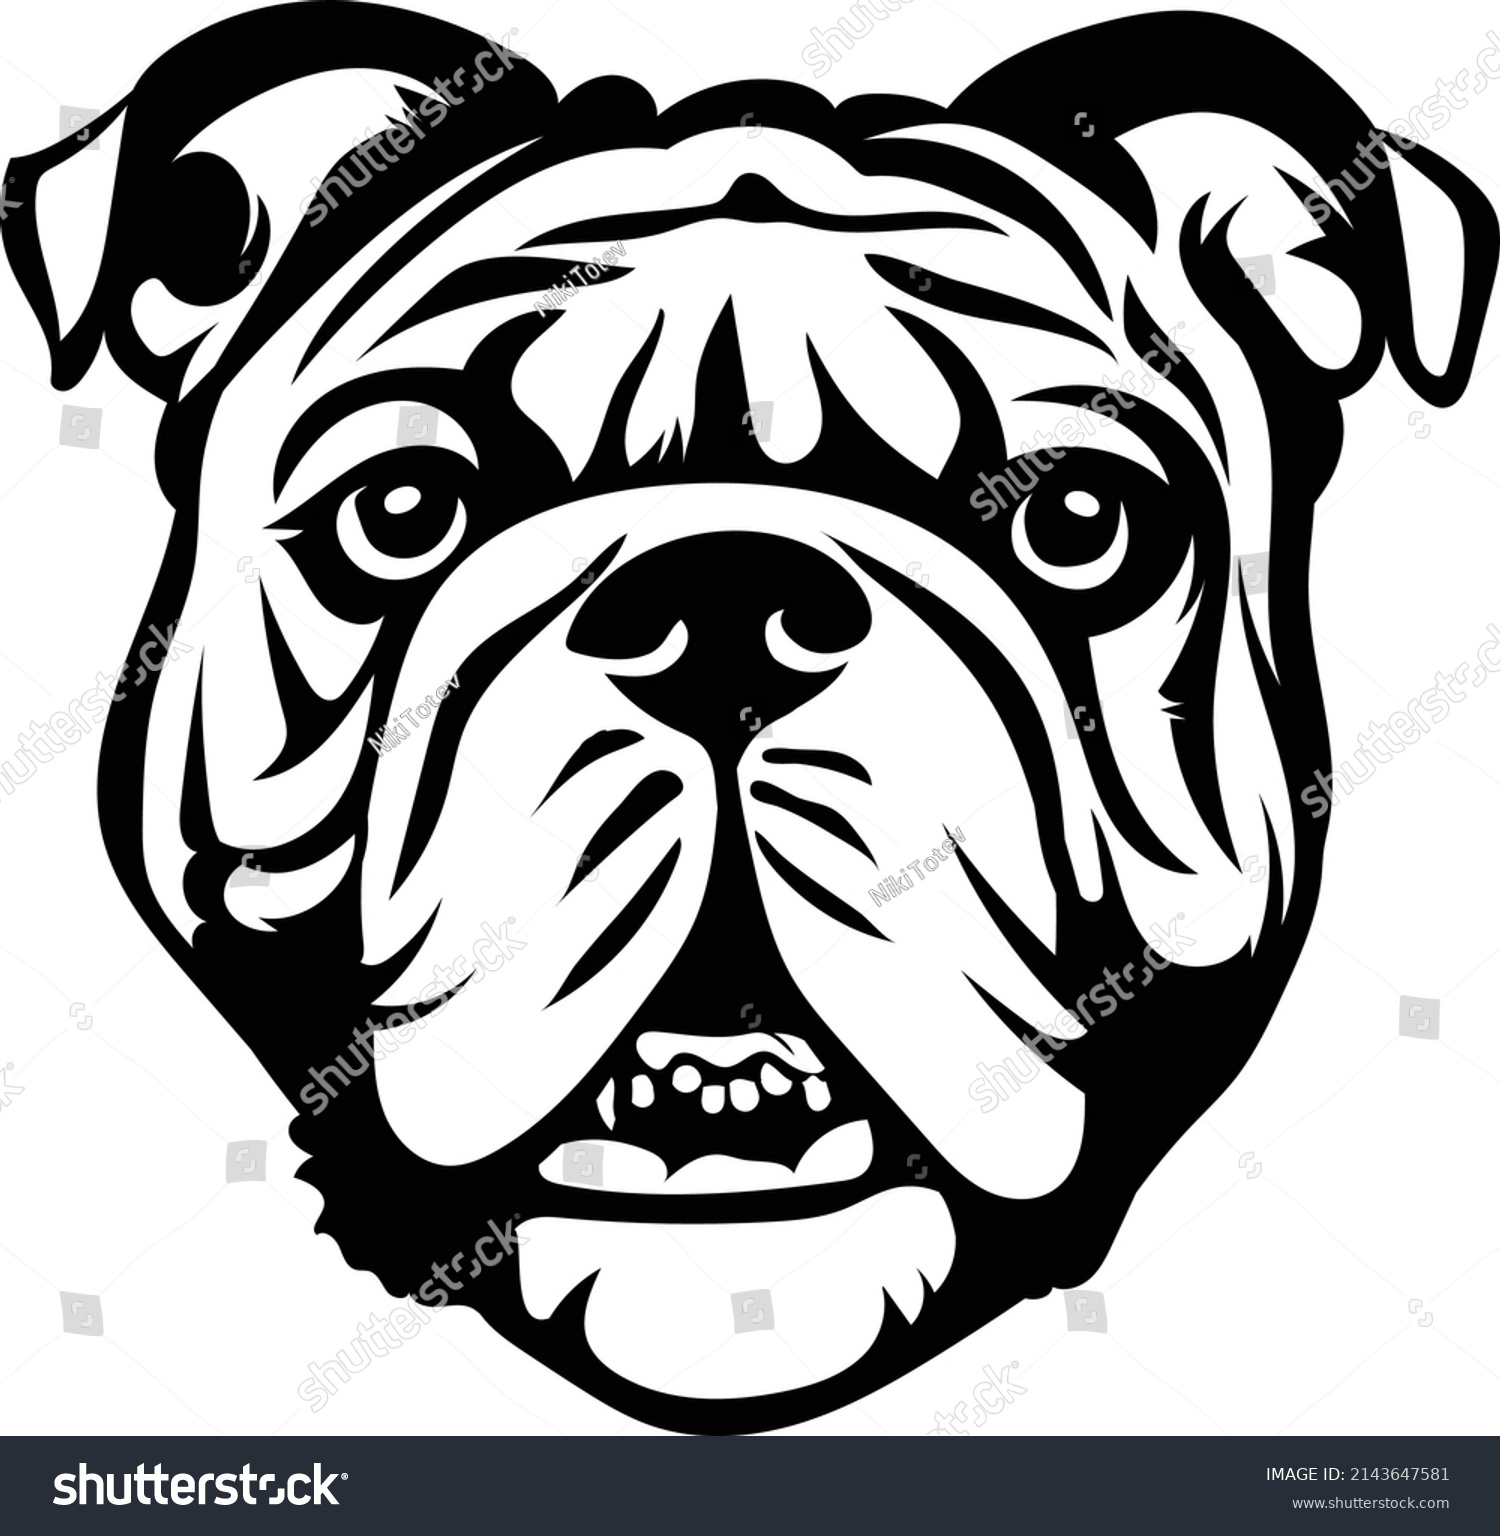 SVG of English Bulldog Head Vector Image   svg